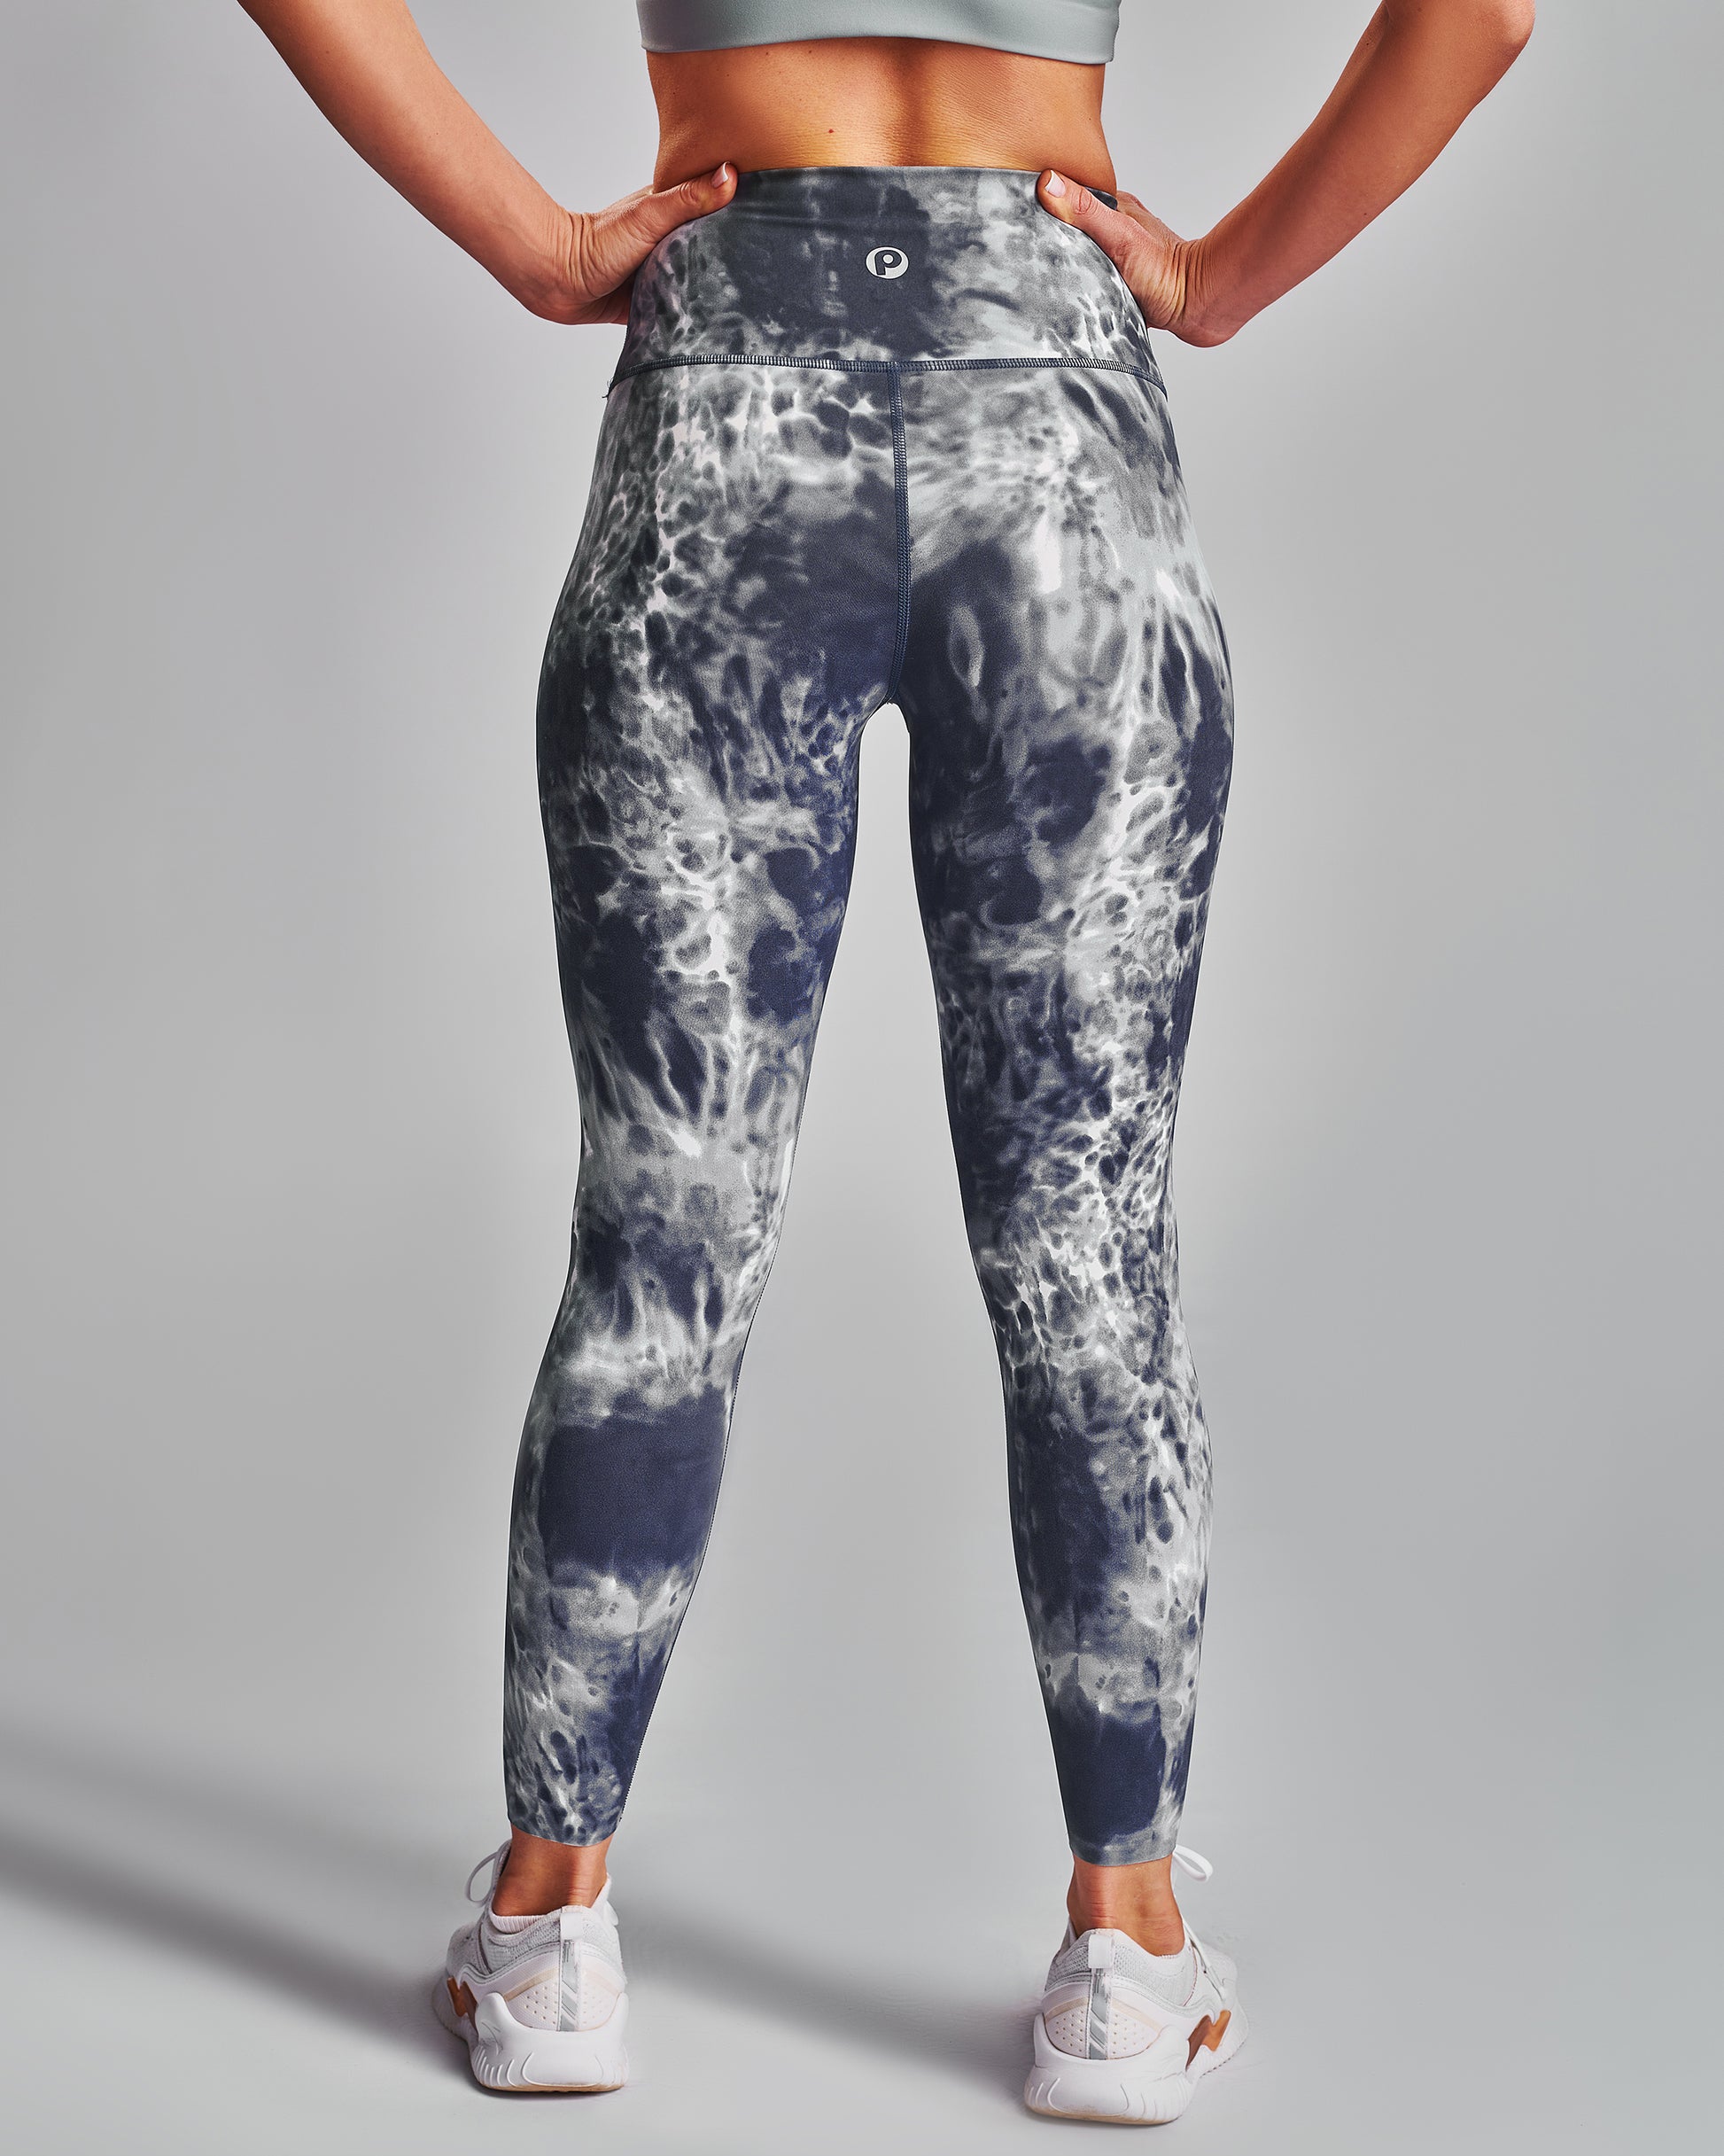 Align Leggings. Grey Tie Dye Print Ultralux fabric. – Pineapple Athleisure